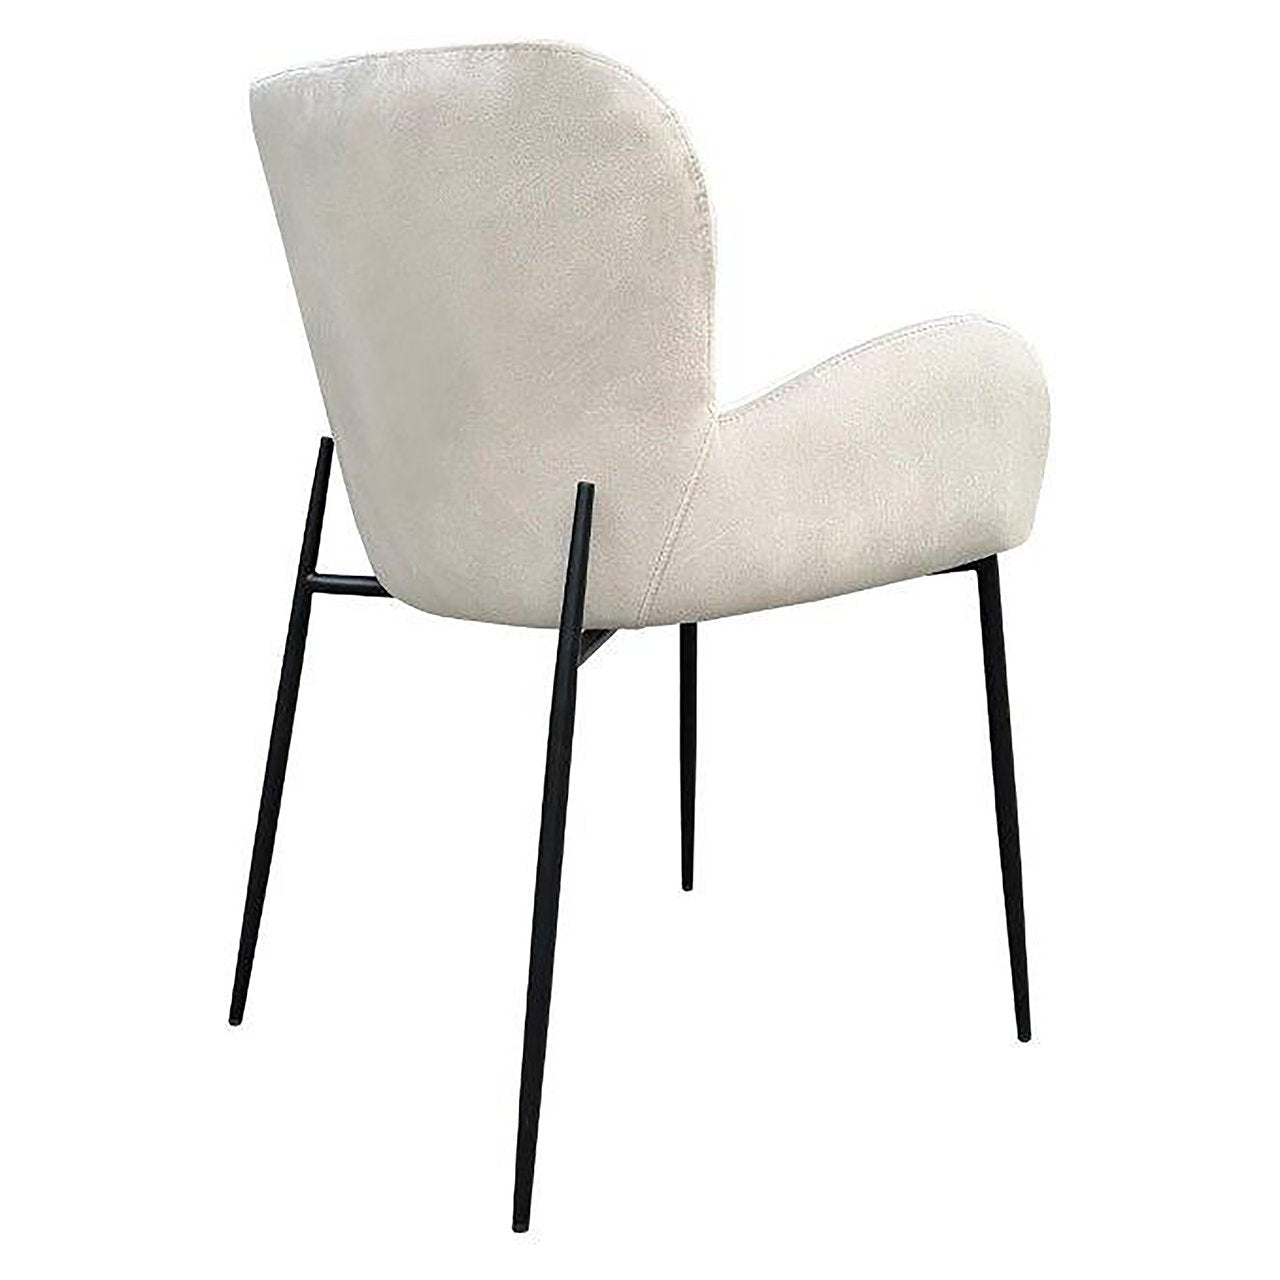 Arm chair Amber khaki velvet fire retardant (FR-Quartz 903 Khaki)